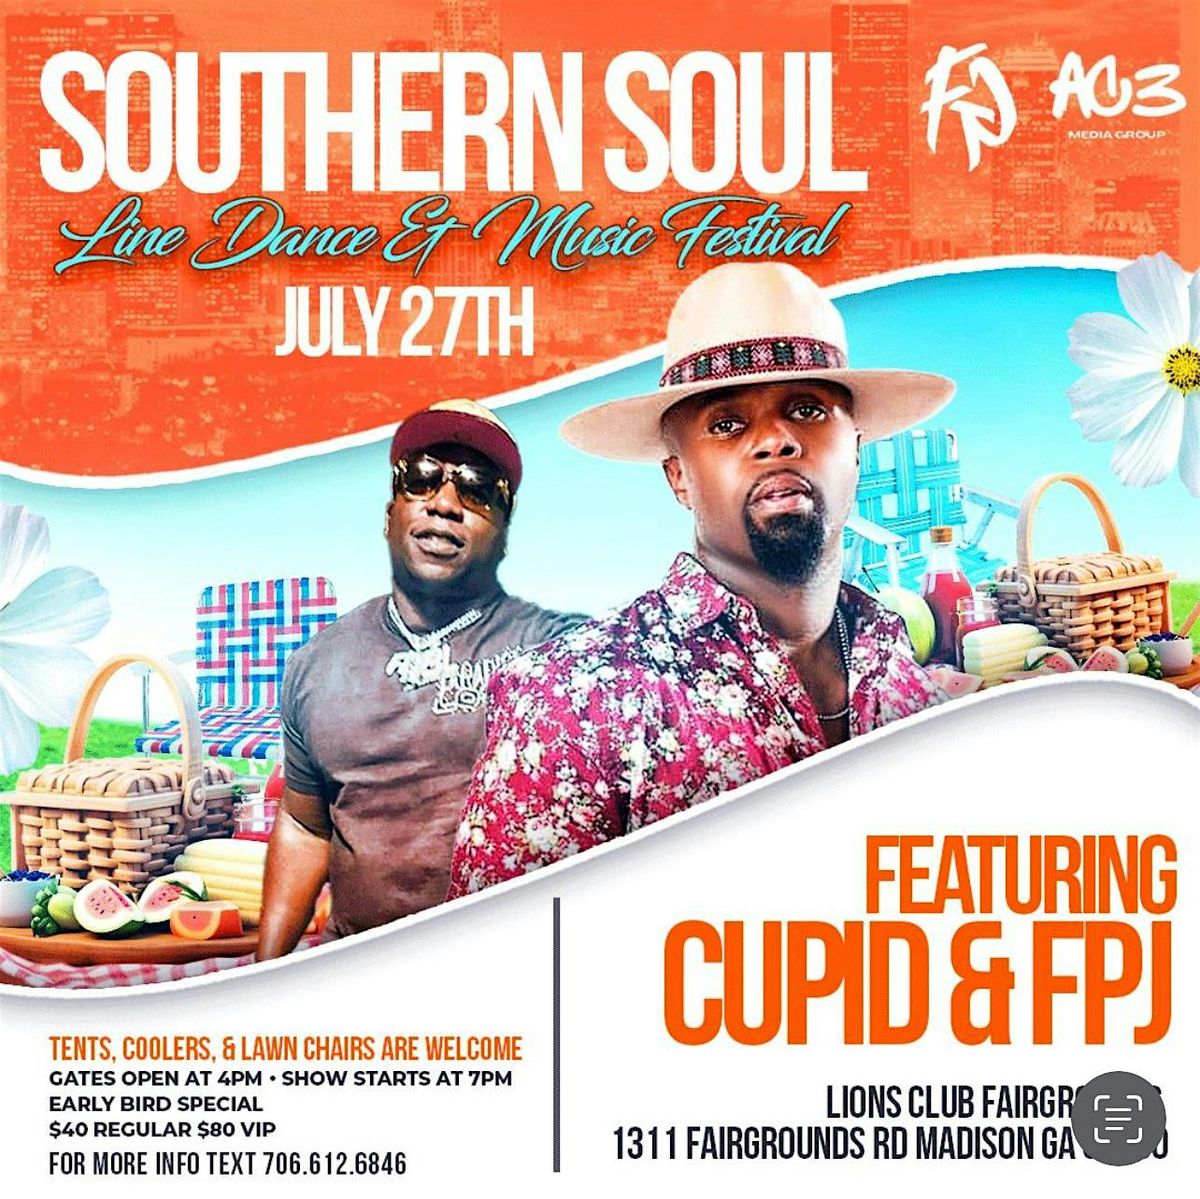 Southern Soul Line Dance & Music Festival Feat. CUPID & FPJ